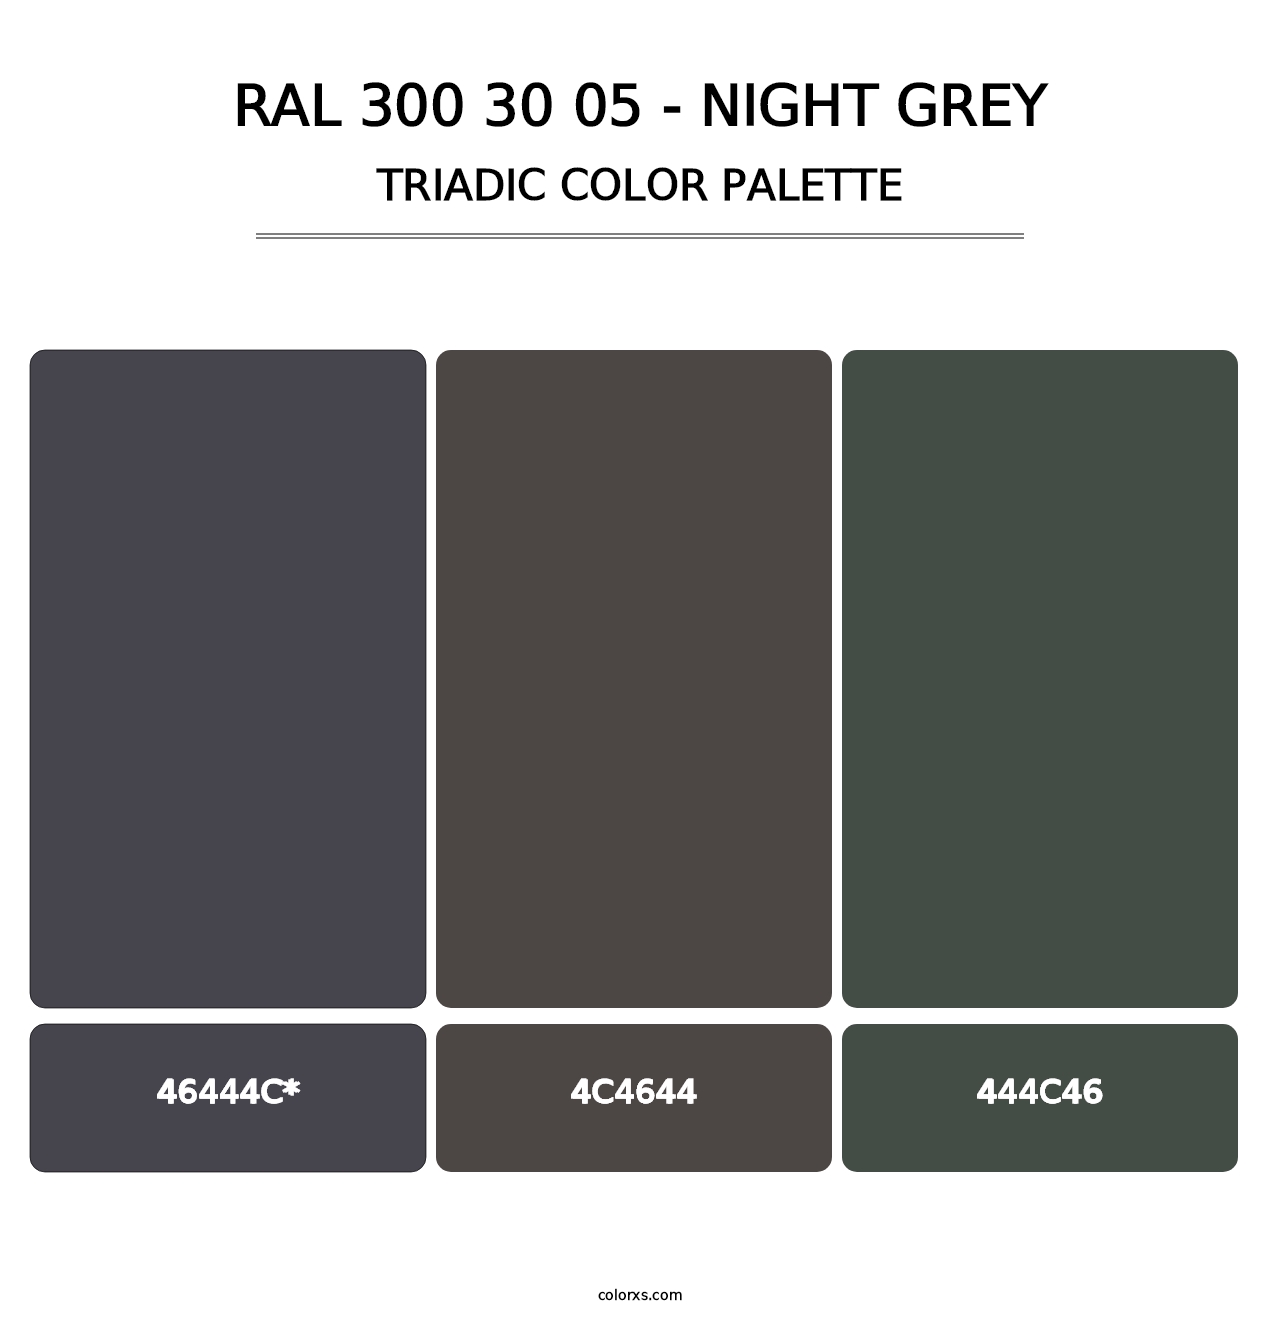 RAL 300 30 05 - Night Grey - Triadic Color Palette